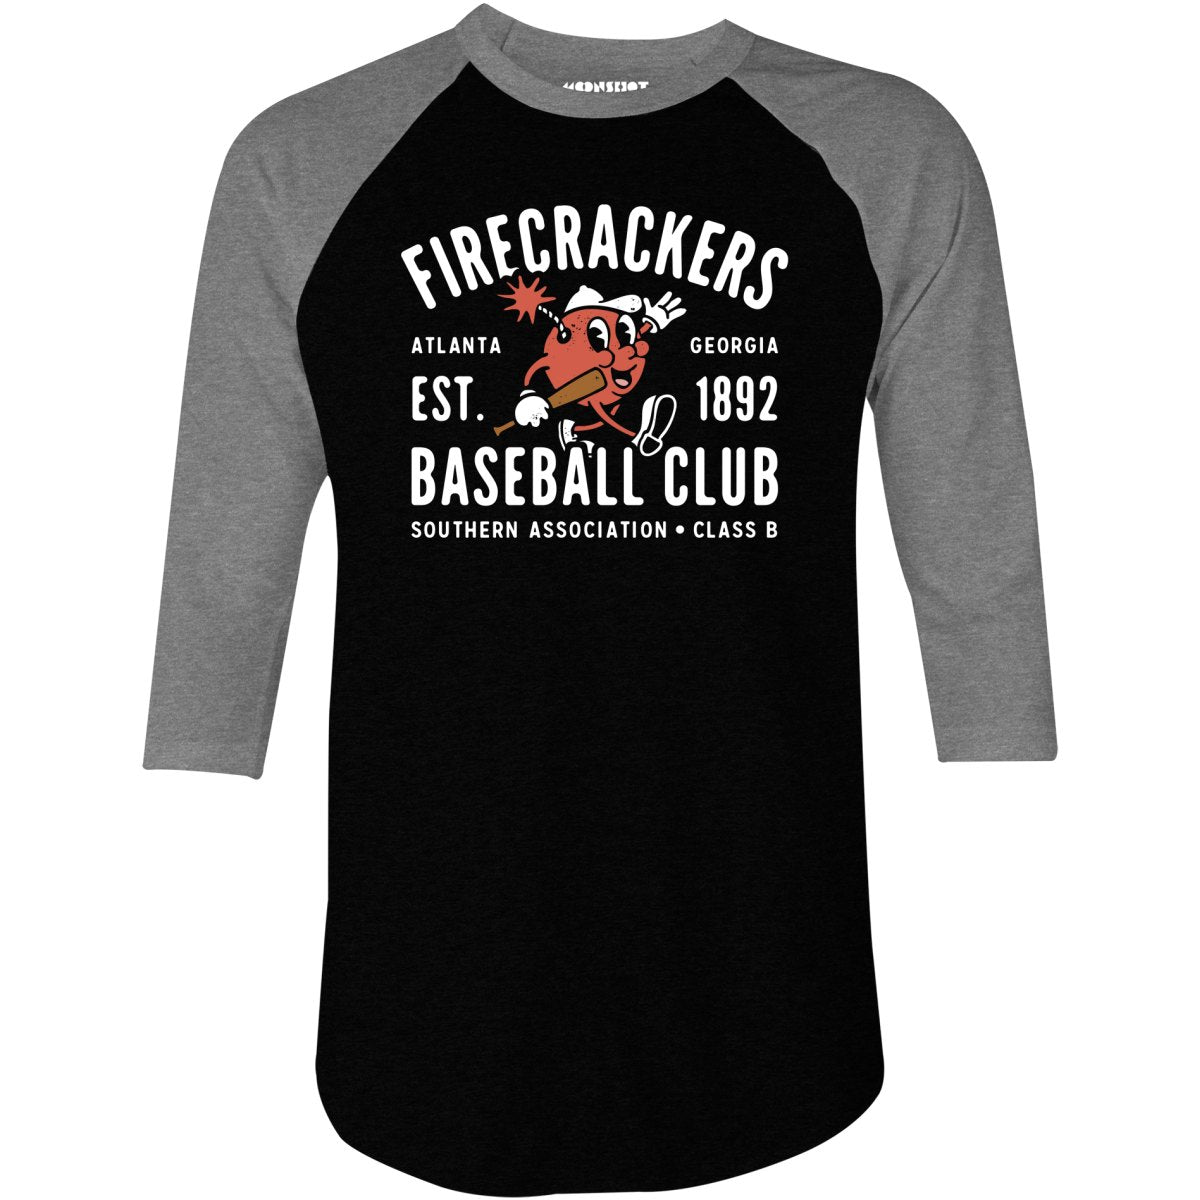 Atlanta Firecrackers - Georgia - Vintage Defunct Baseball Teams - 3/4 Sleeve Raglan T-Shirt